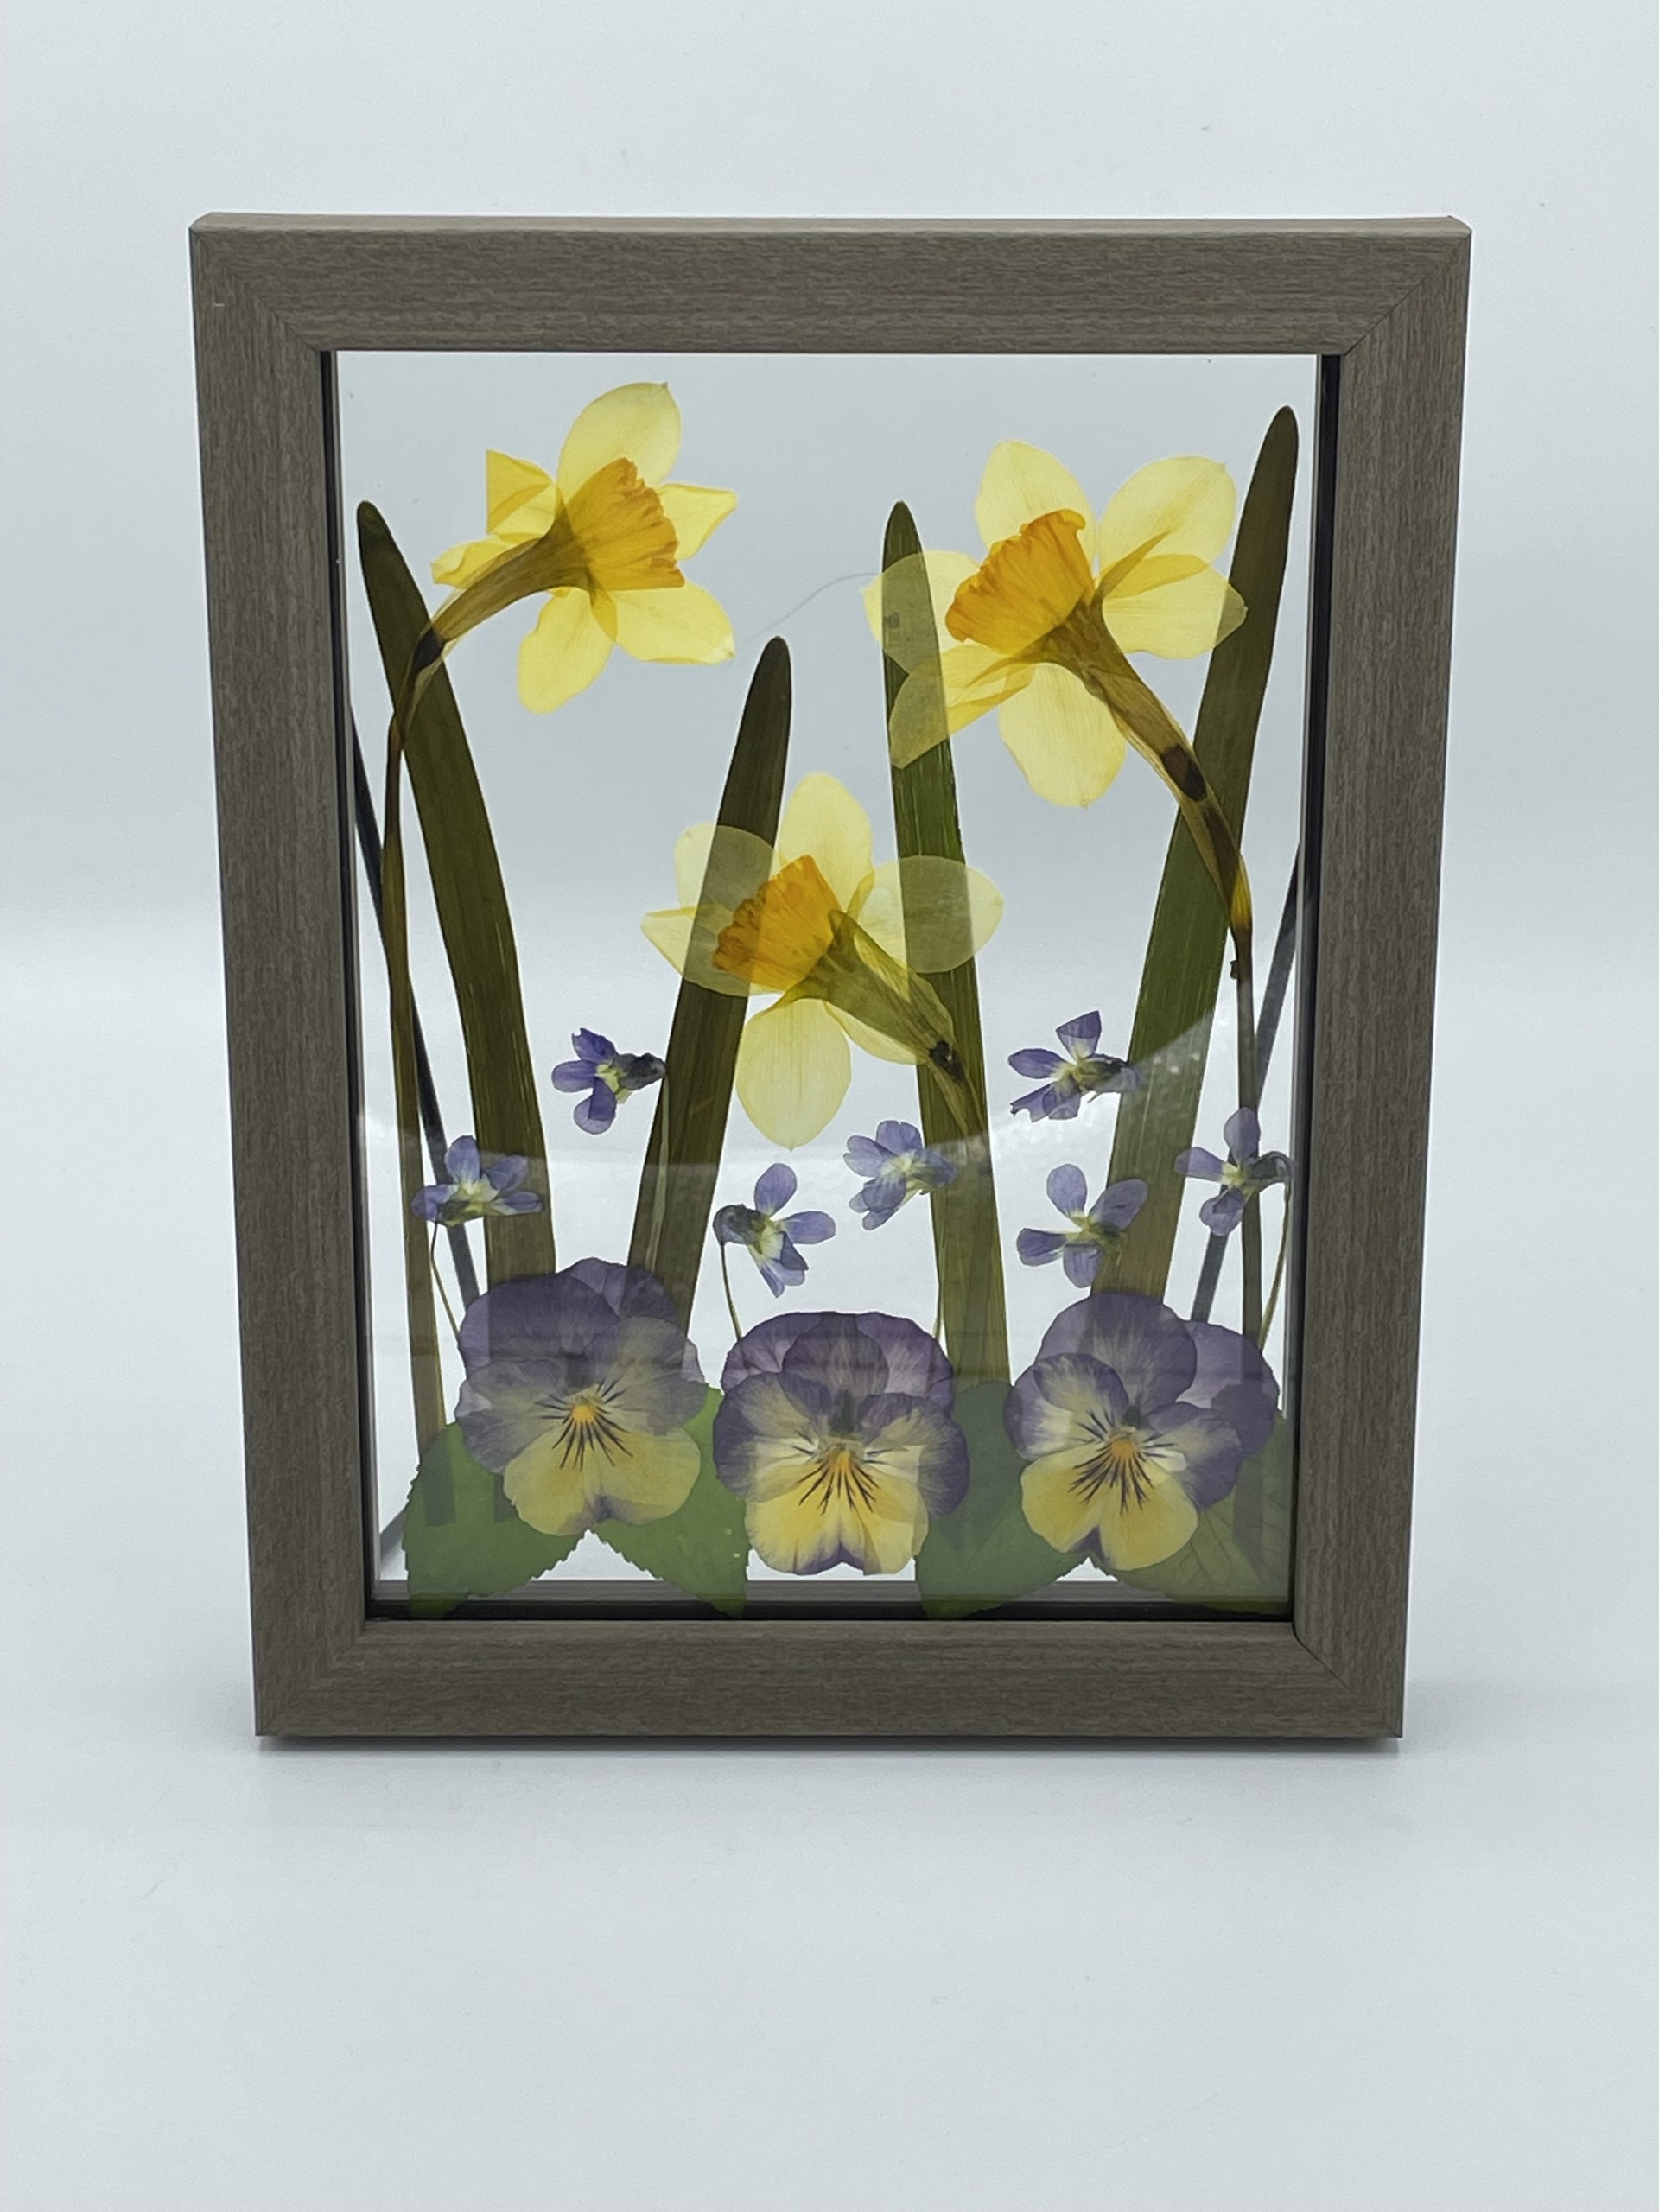 A Host of Golden Daffodils by Joy Ellis